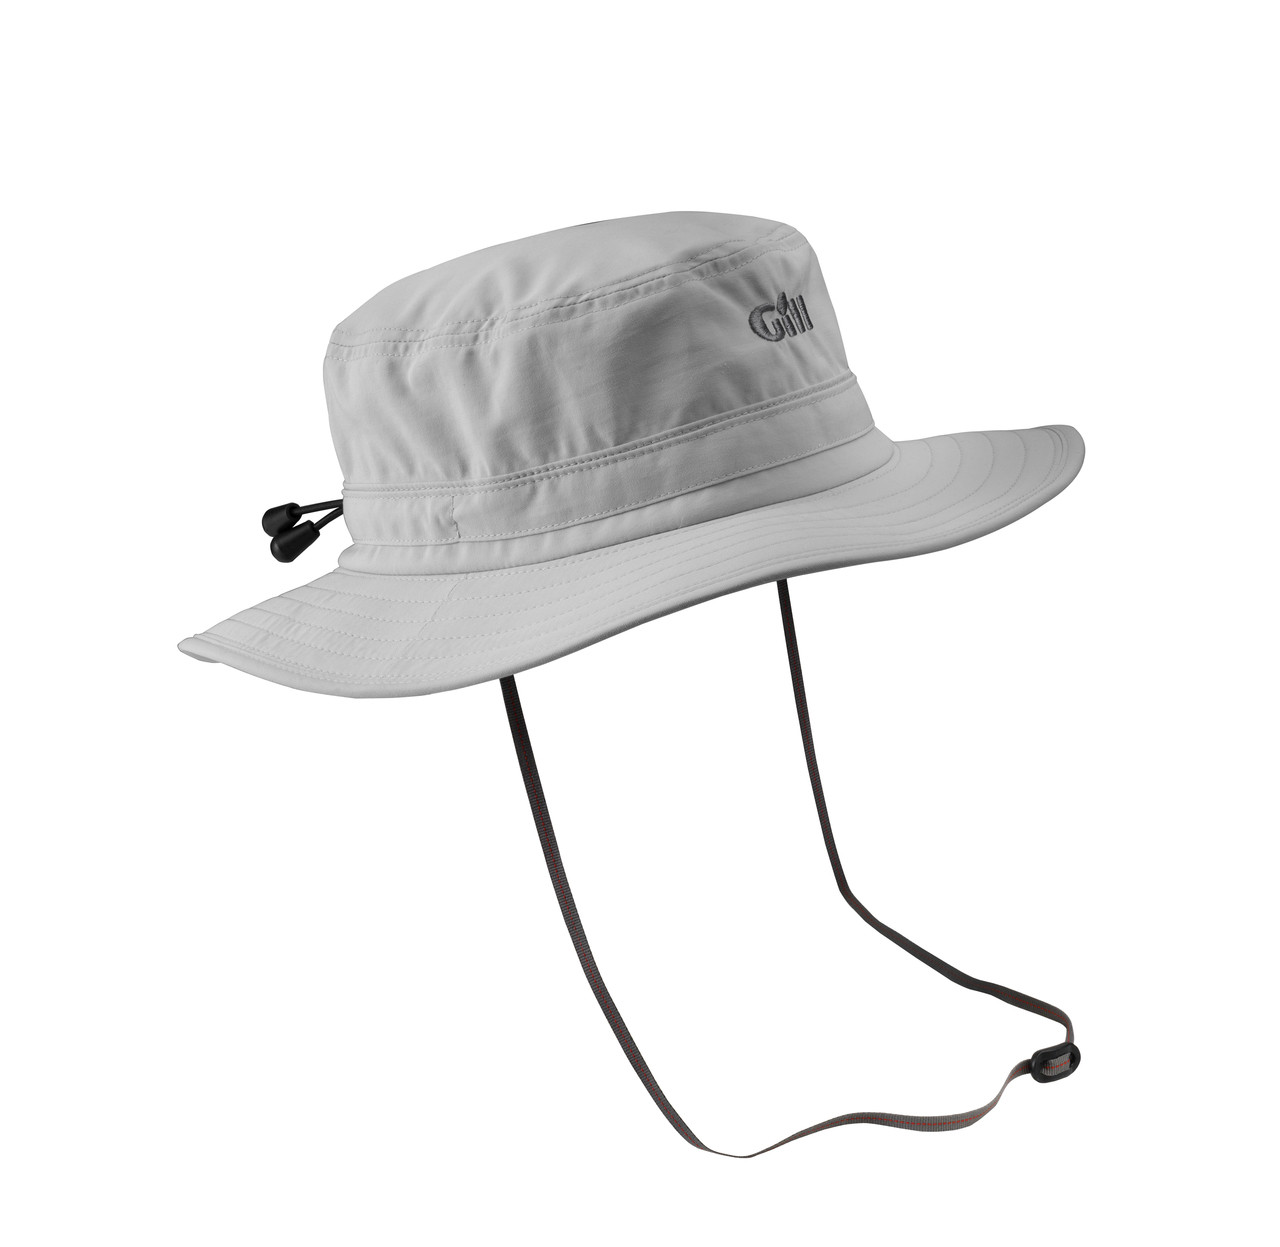 Gill Technical Sun Hat